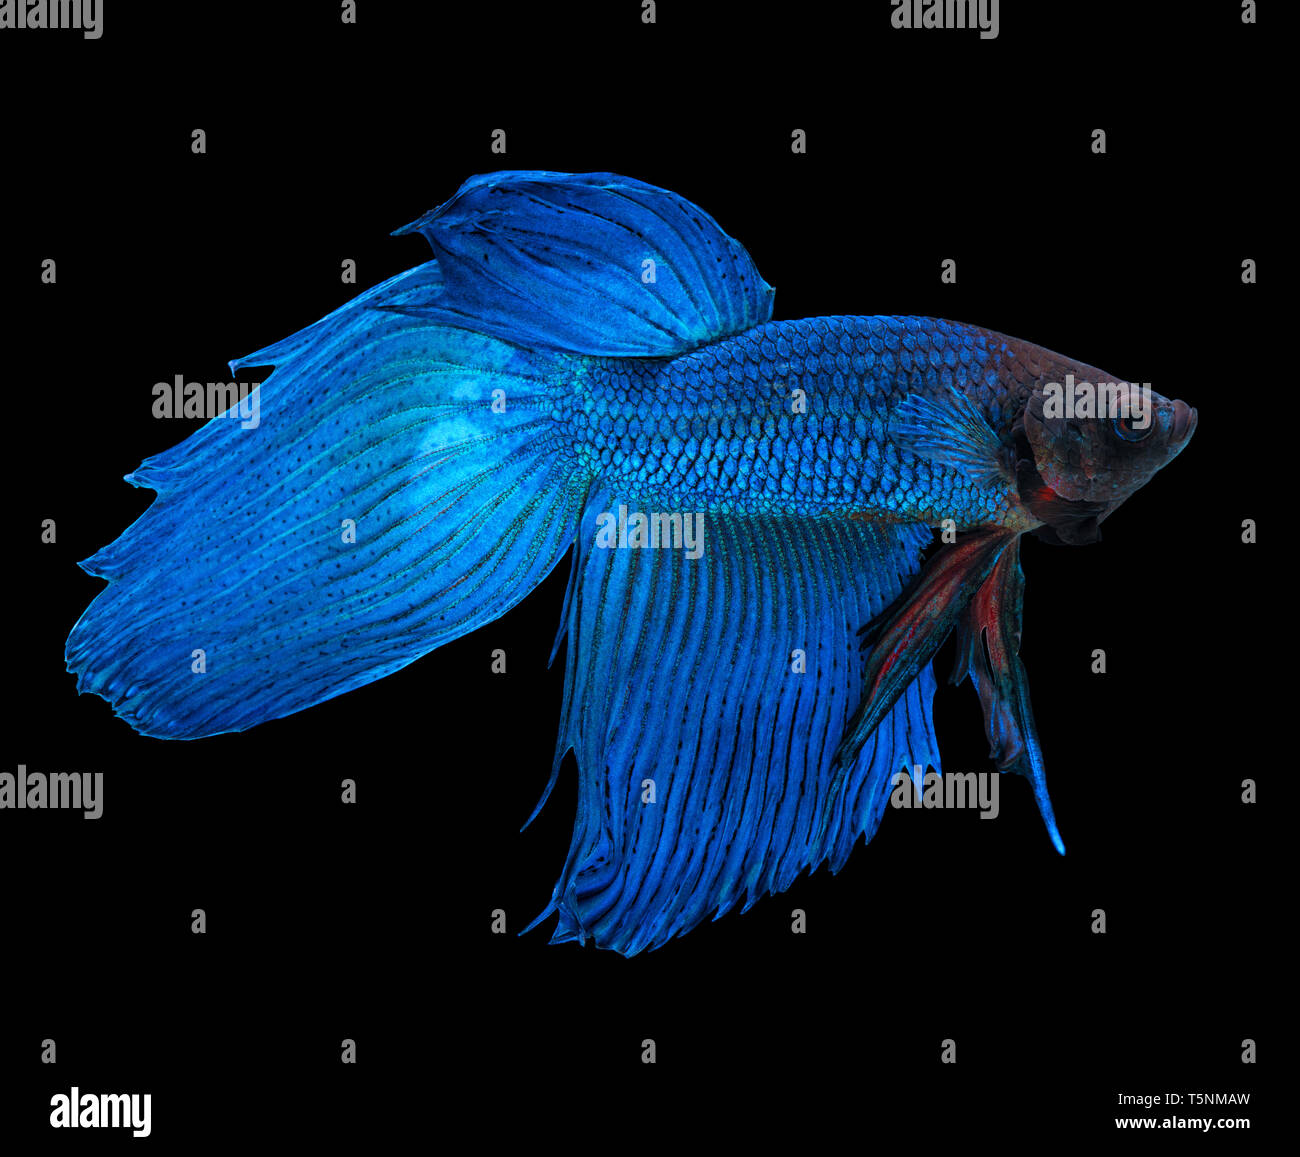 Blue siamese fighting fish, betta splendens, isolated on black background Stock Photo